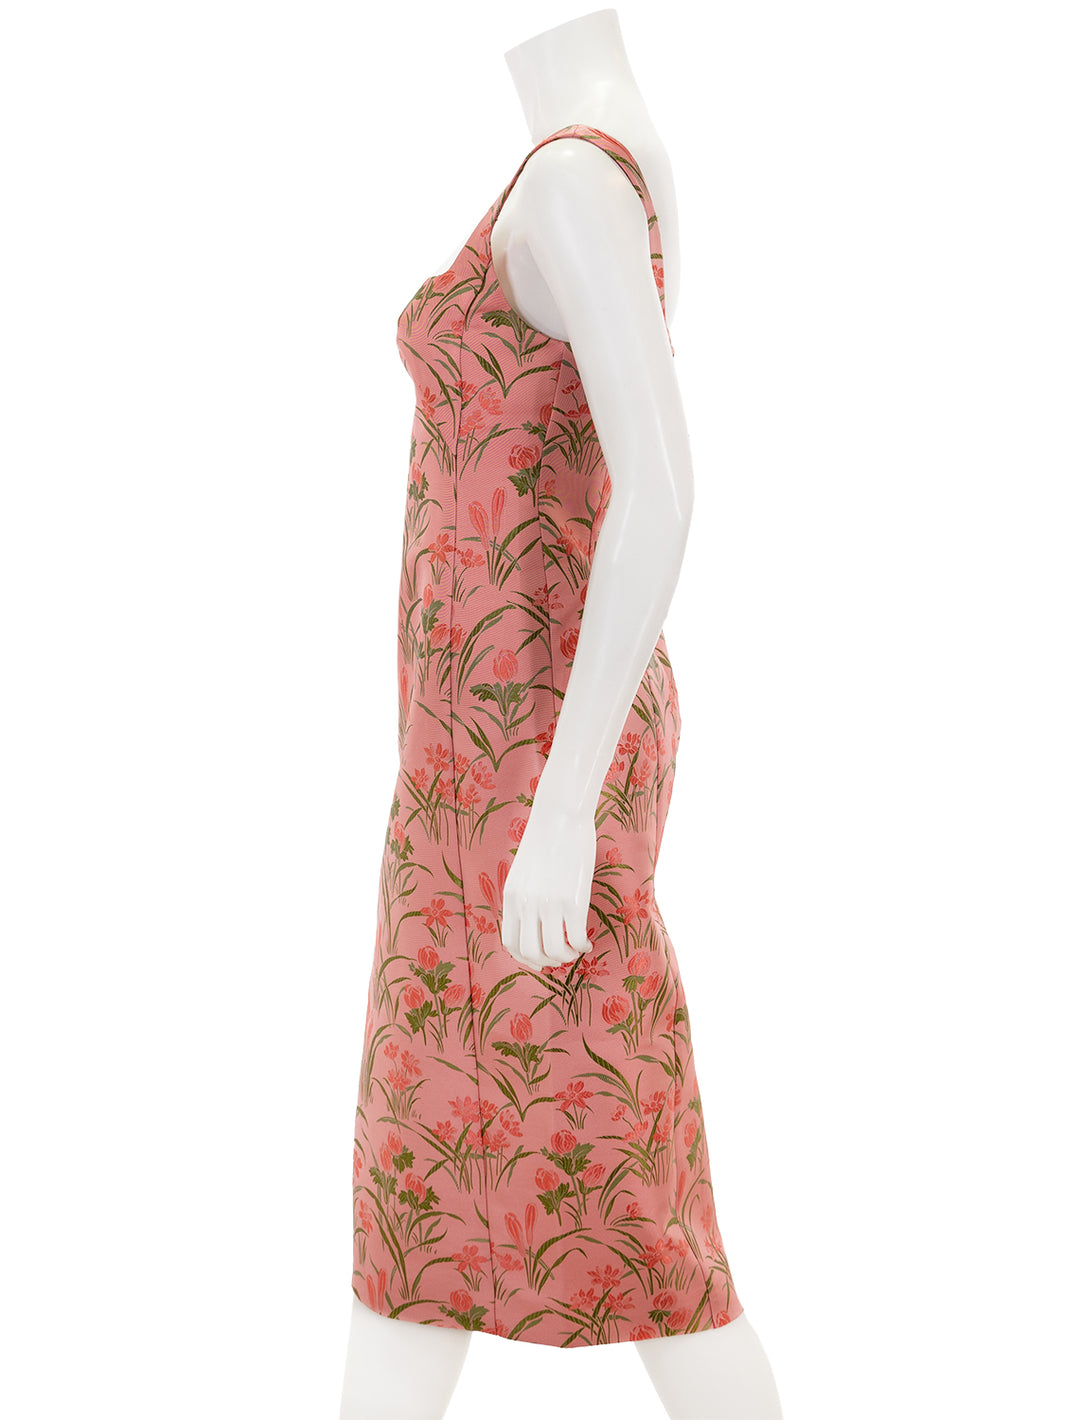 Side view of Cara Cara's carlie dress in pink jacquard.